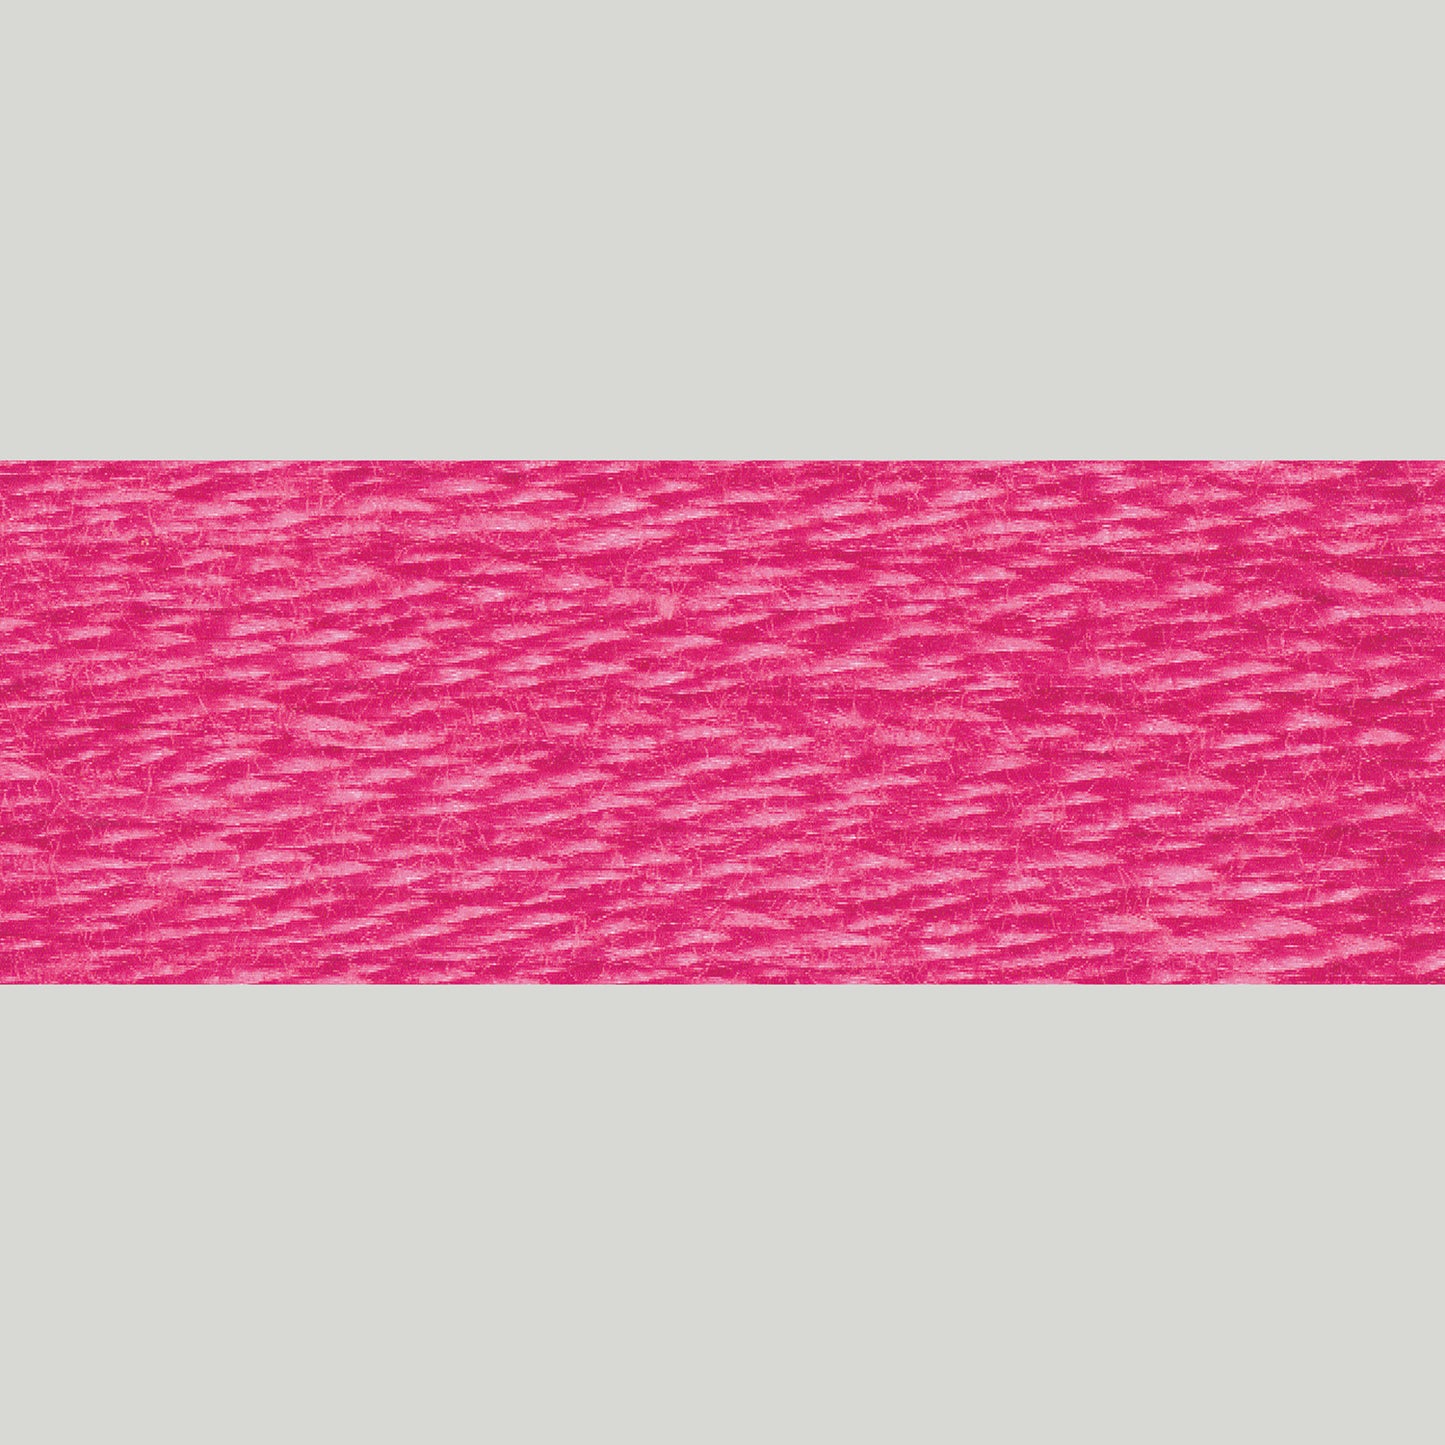 DMC Embroidery Floss - 3804 Dark Cyclamen Pink Alternative View #1